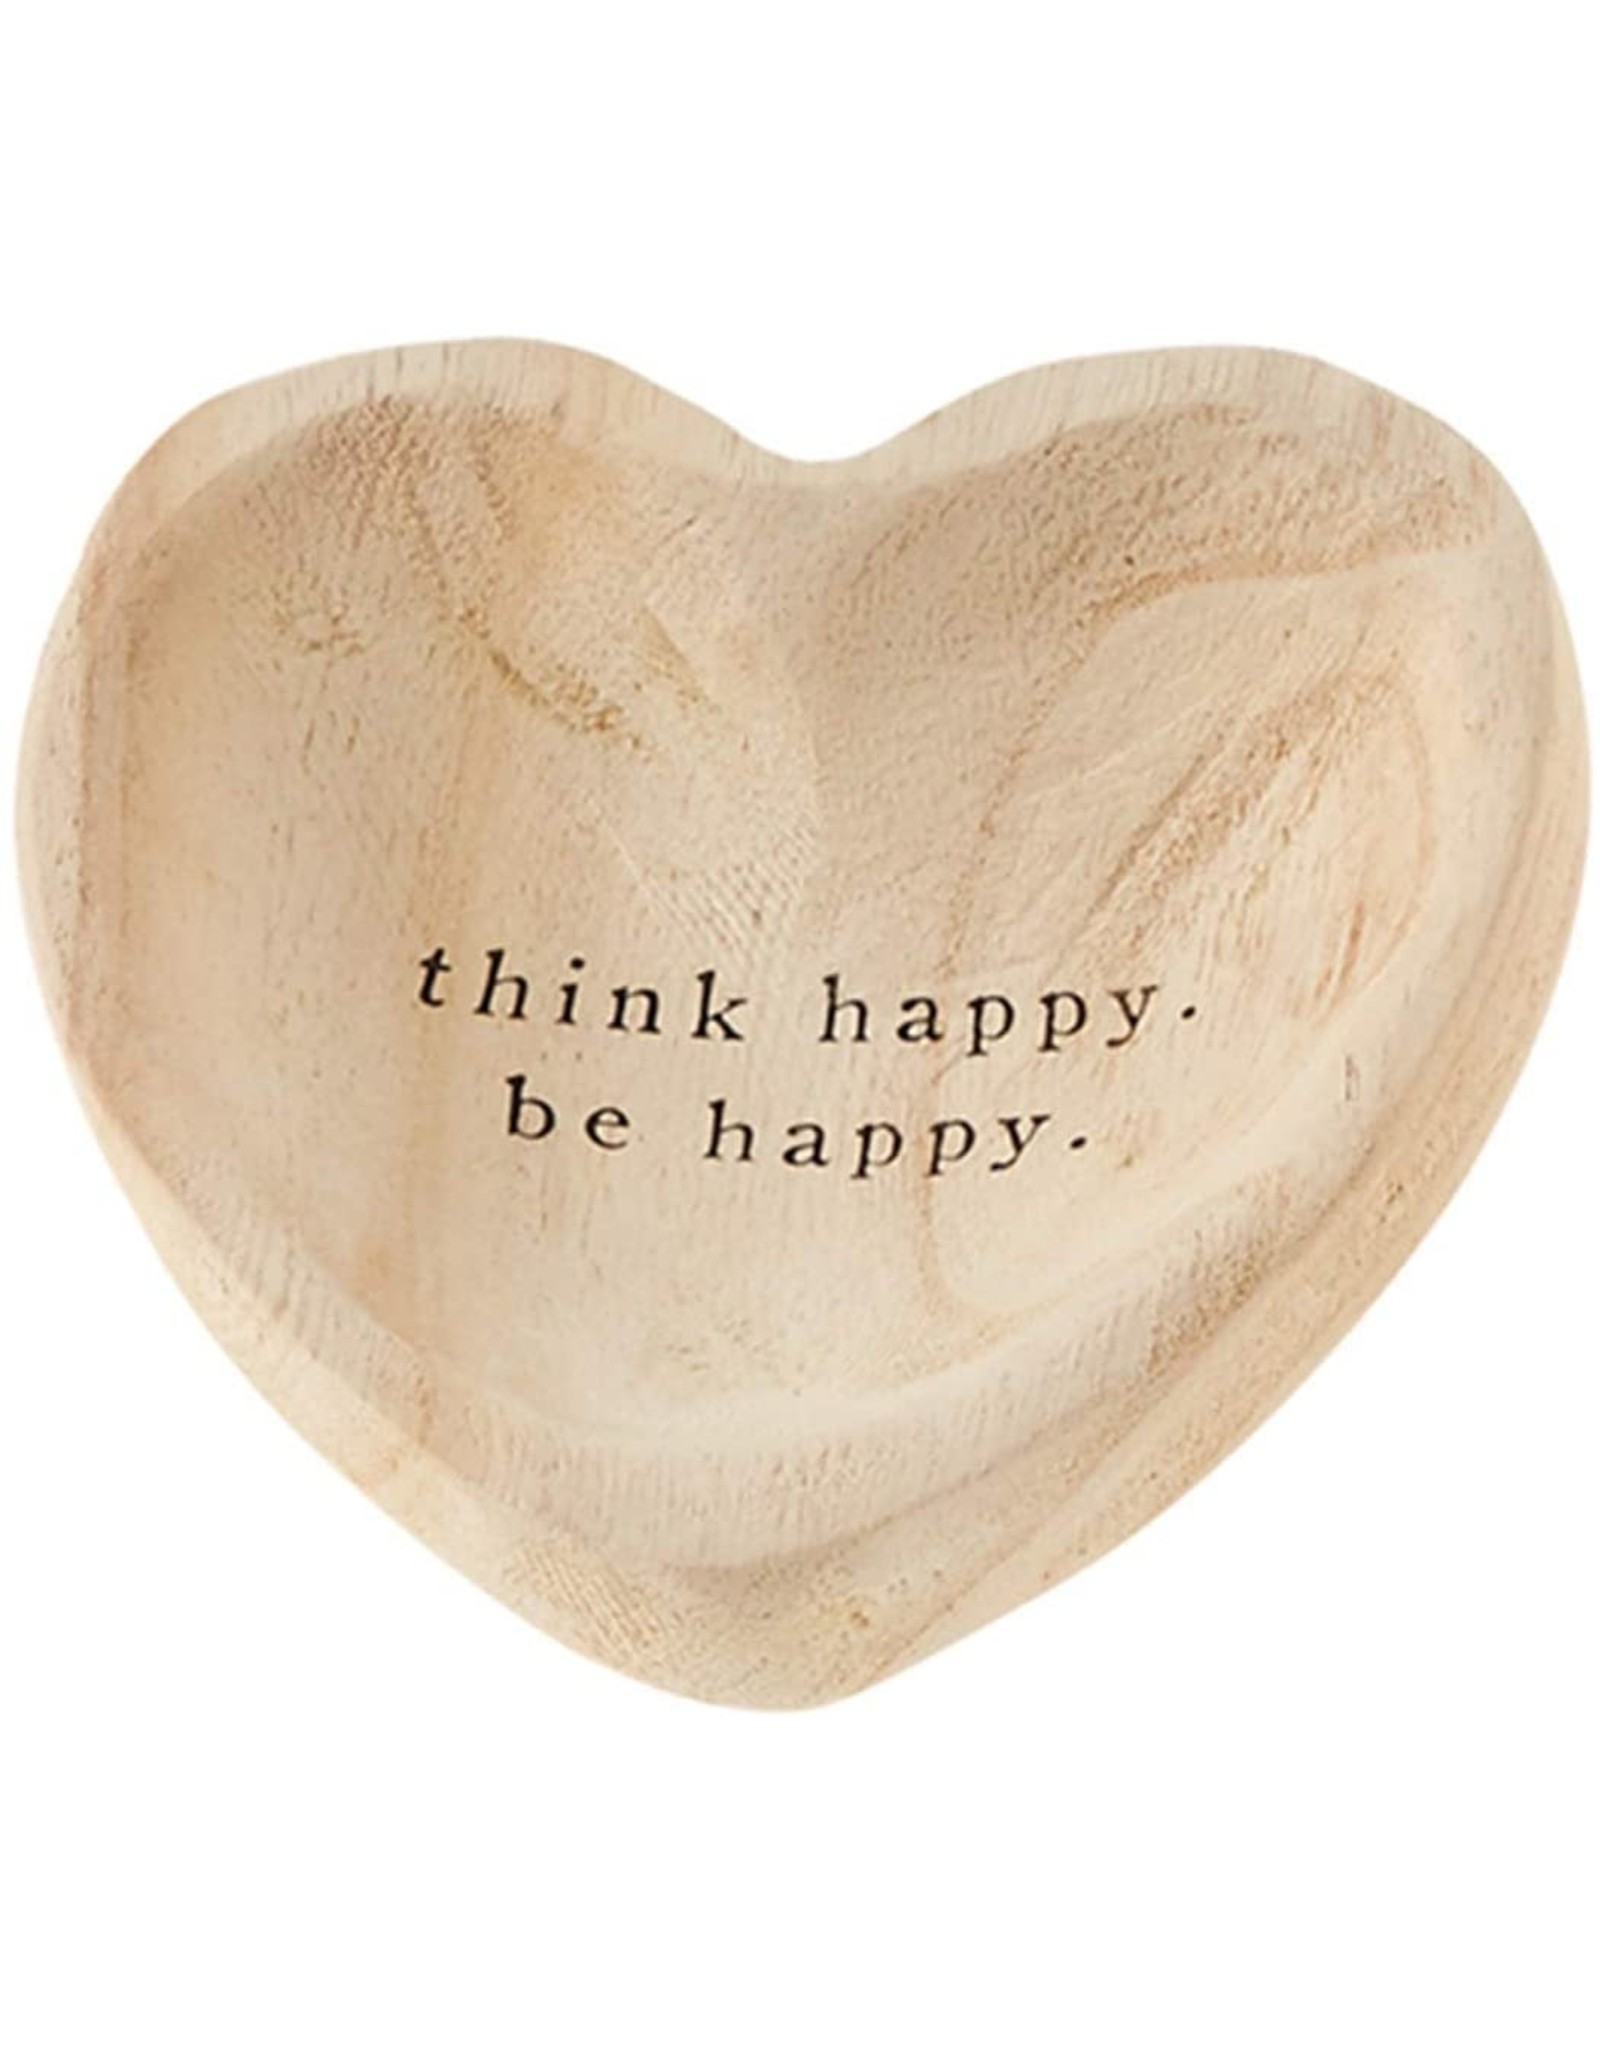 Mud Pie Wood Heart Trinket Tray - Think Happy Be Happy